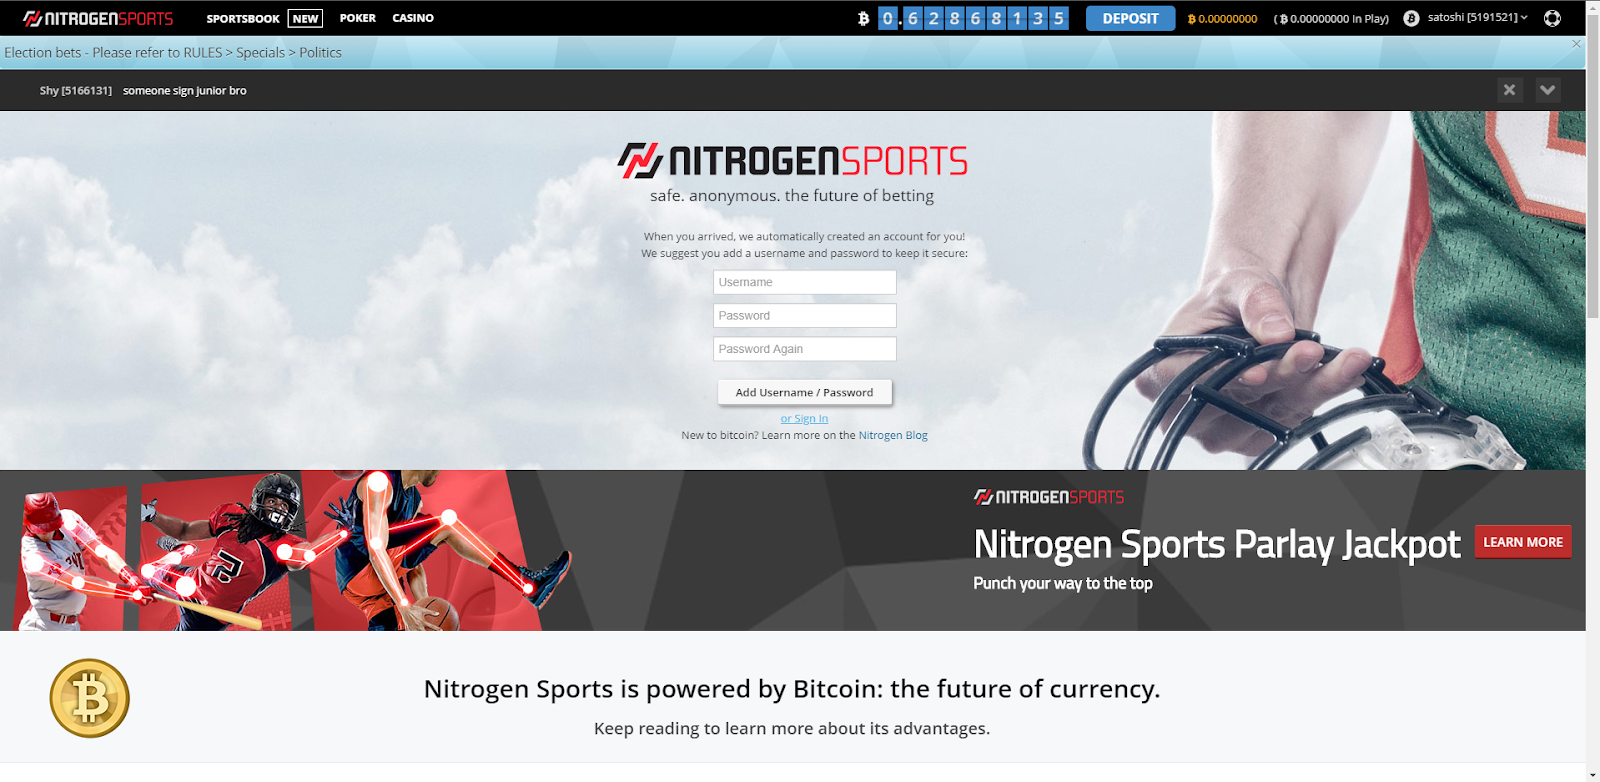 Nitrogen Sports Home